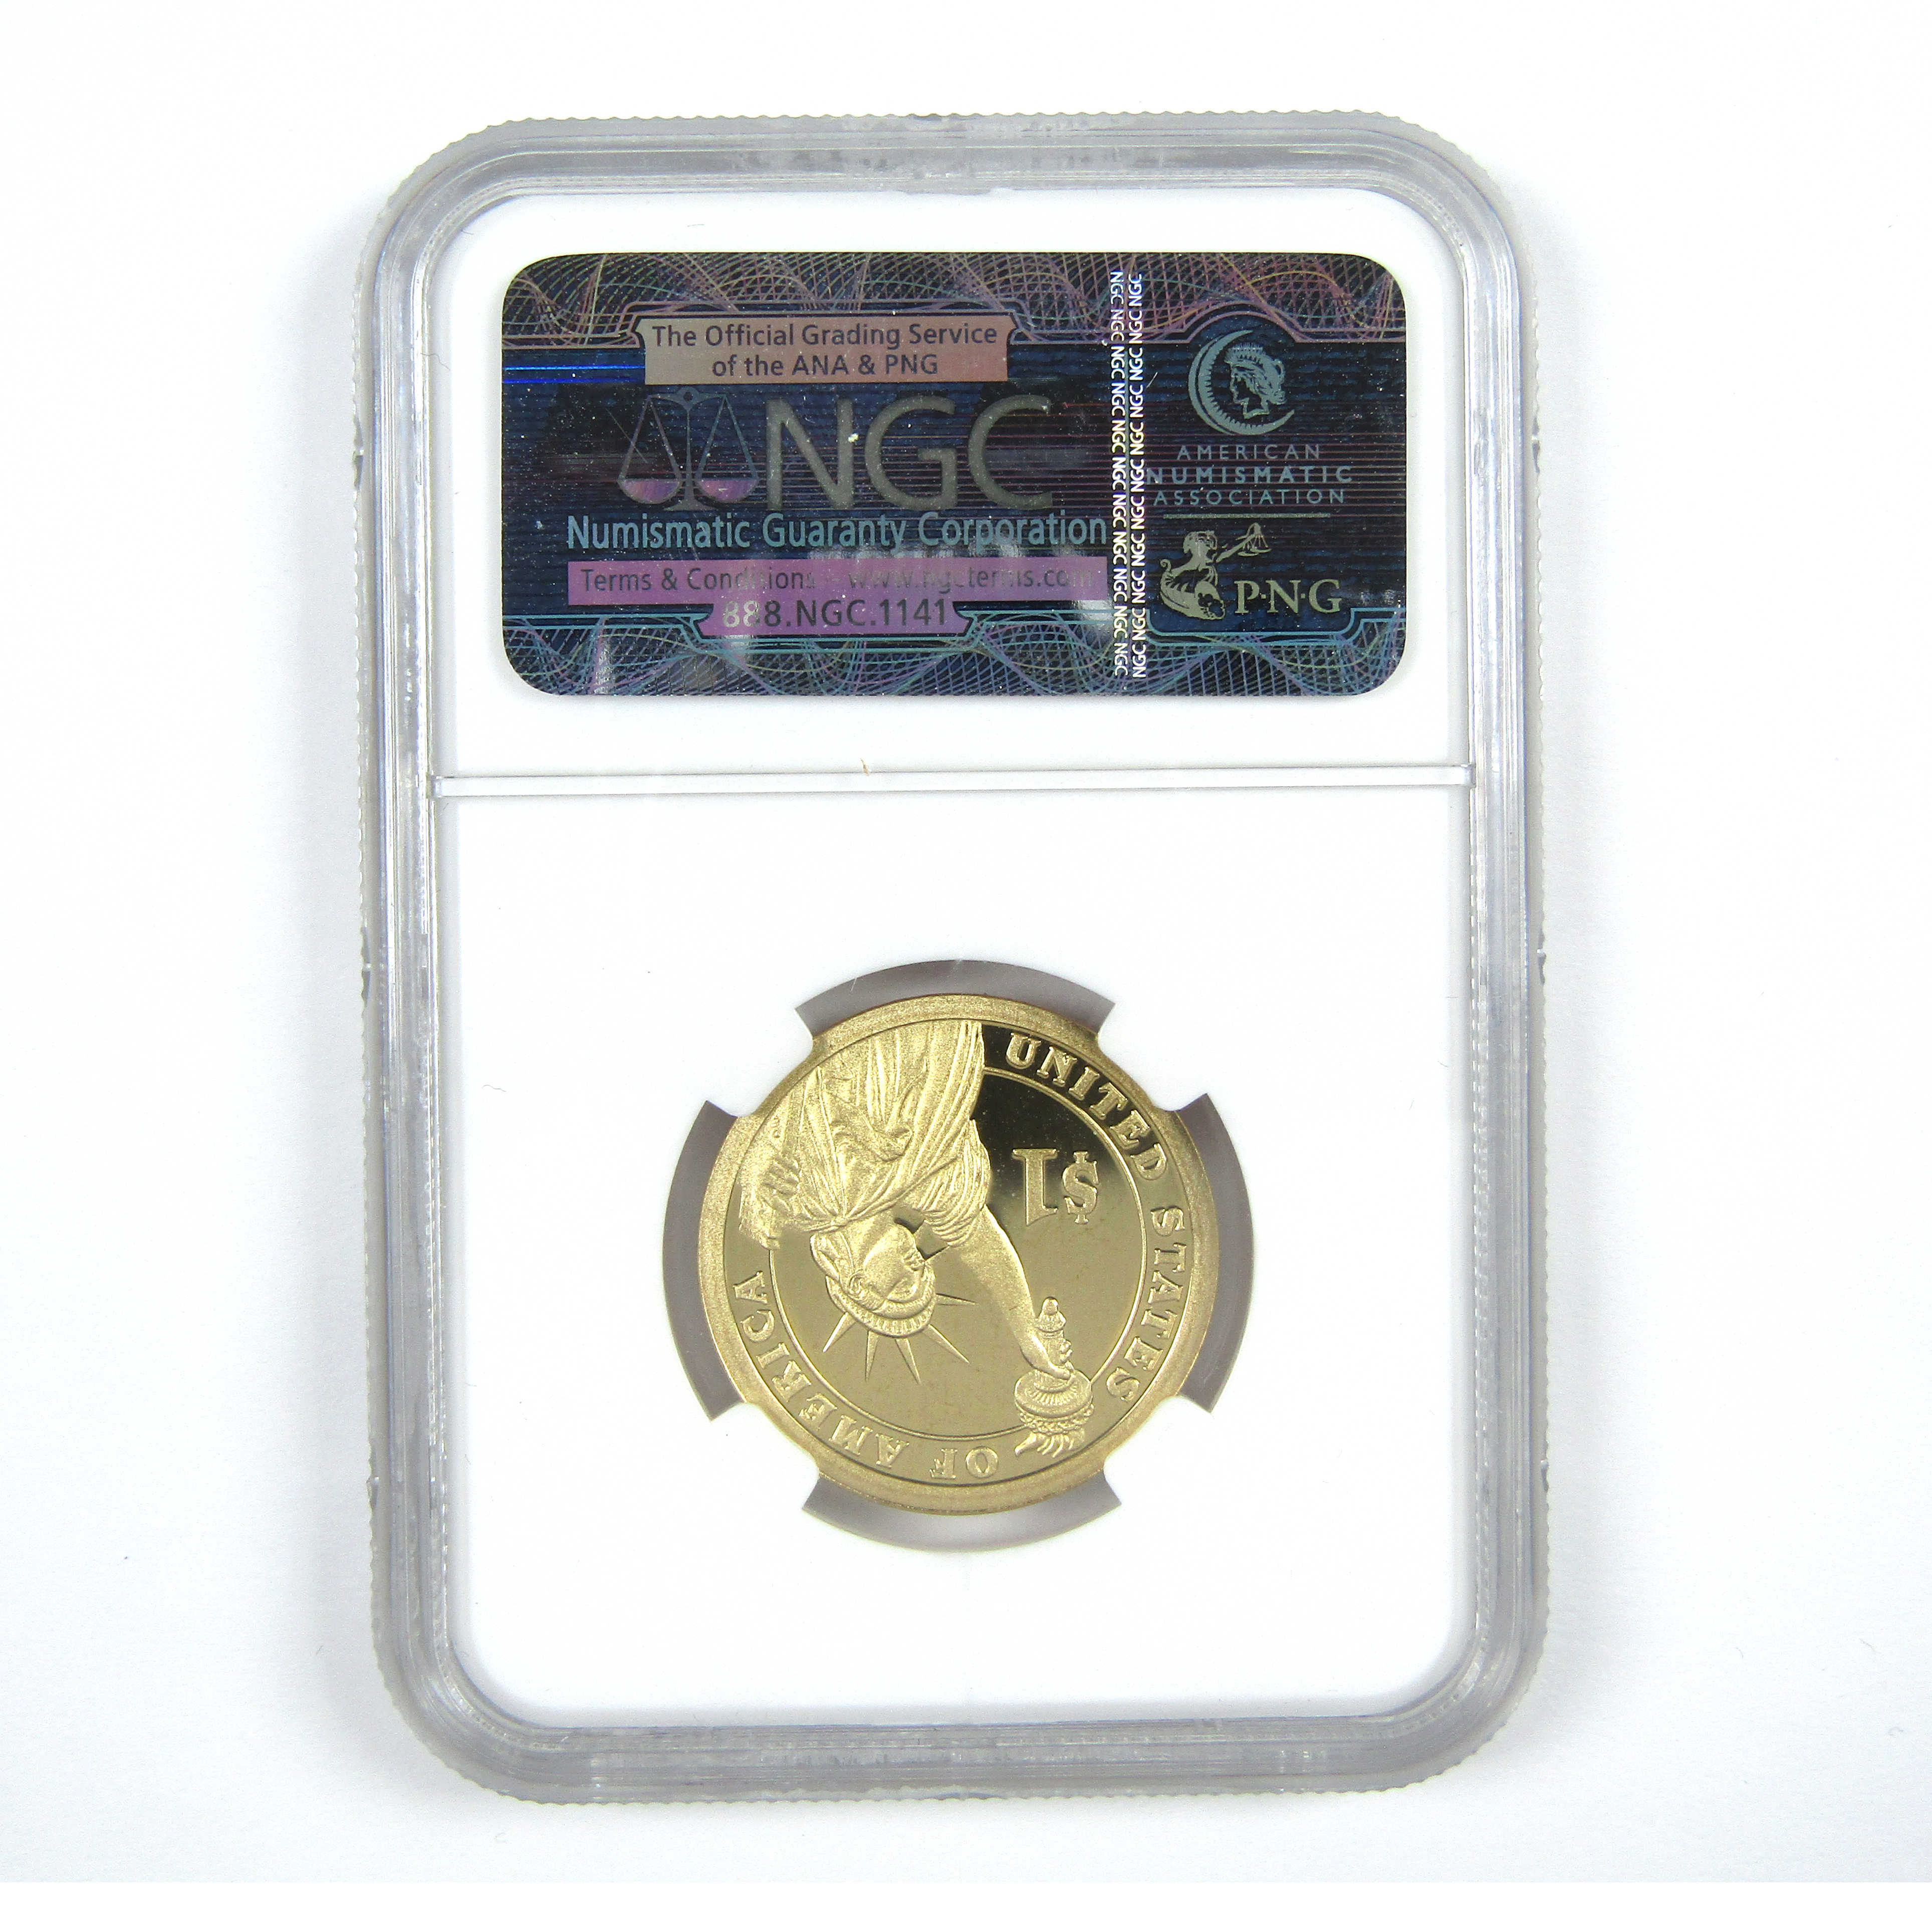 2010 S Abraham Lincoln Presidential Dollar PF 69 UCAM NGC SKU:CPC6129